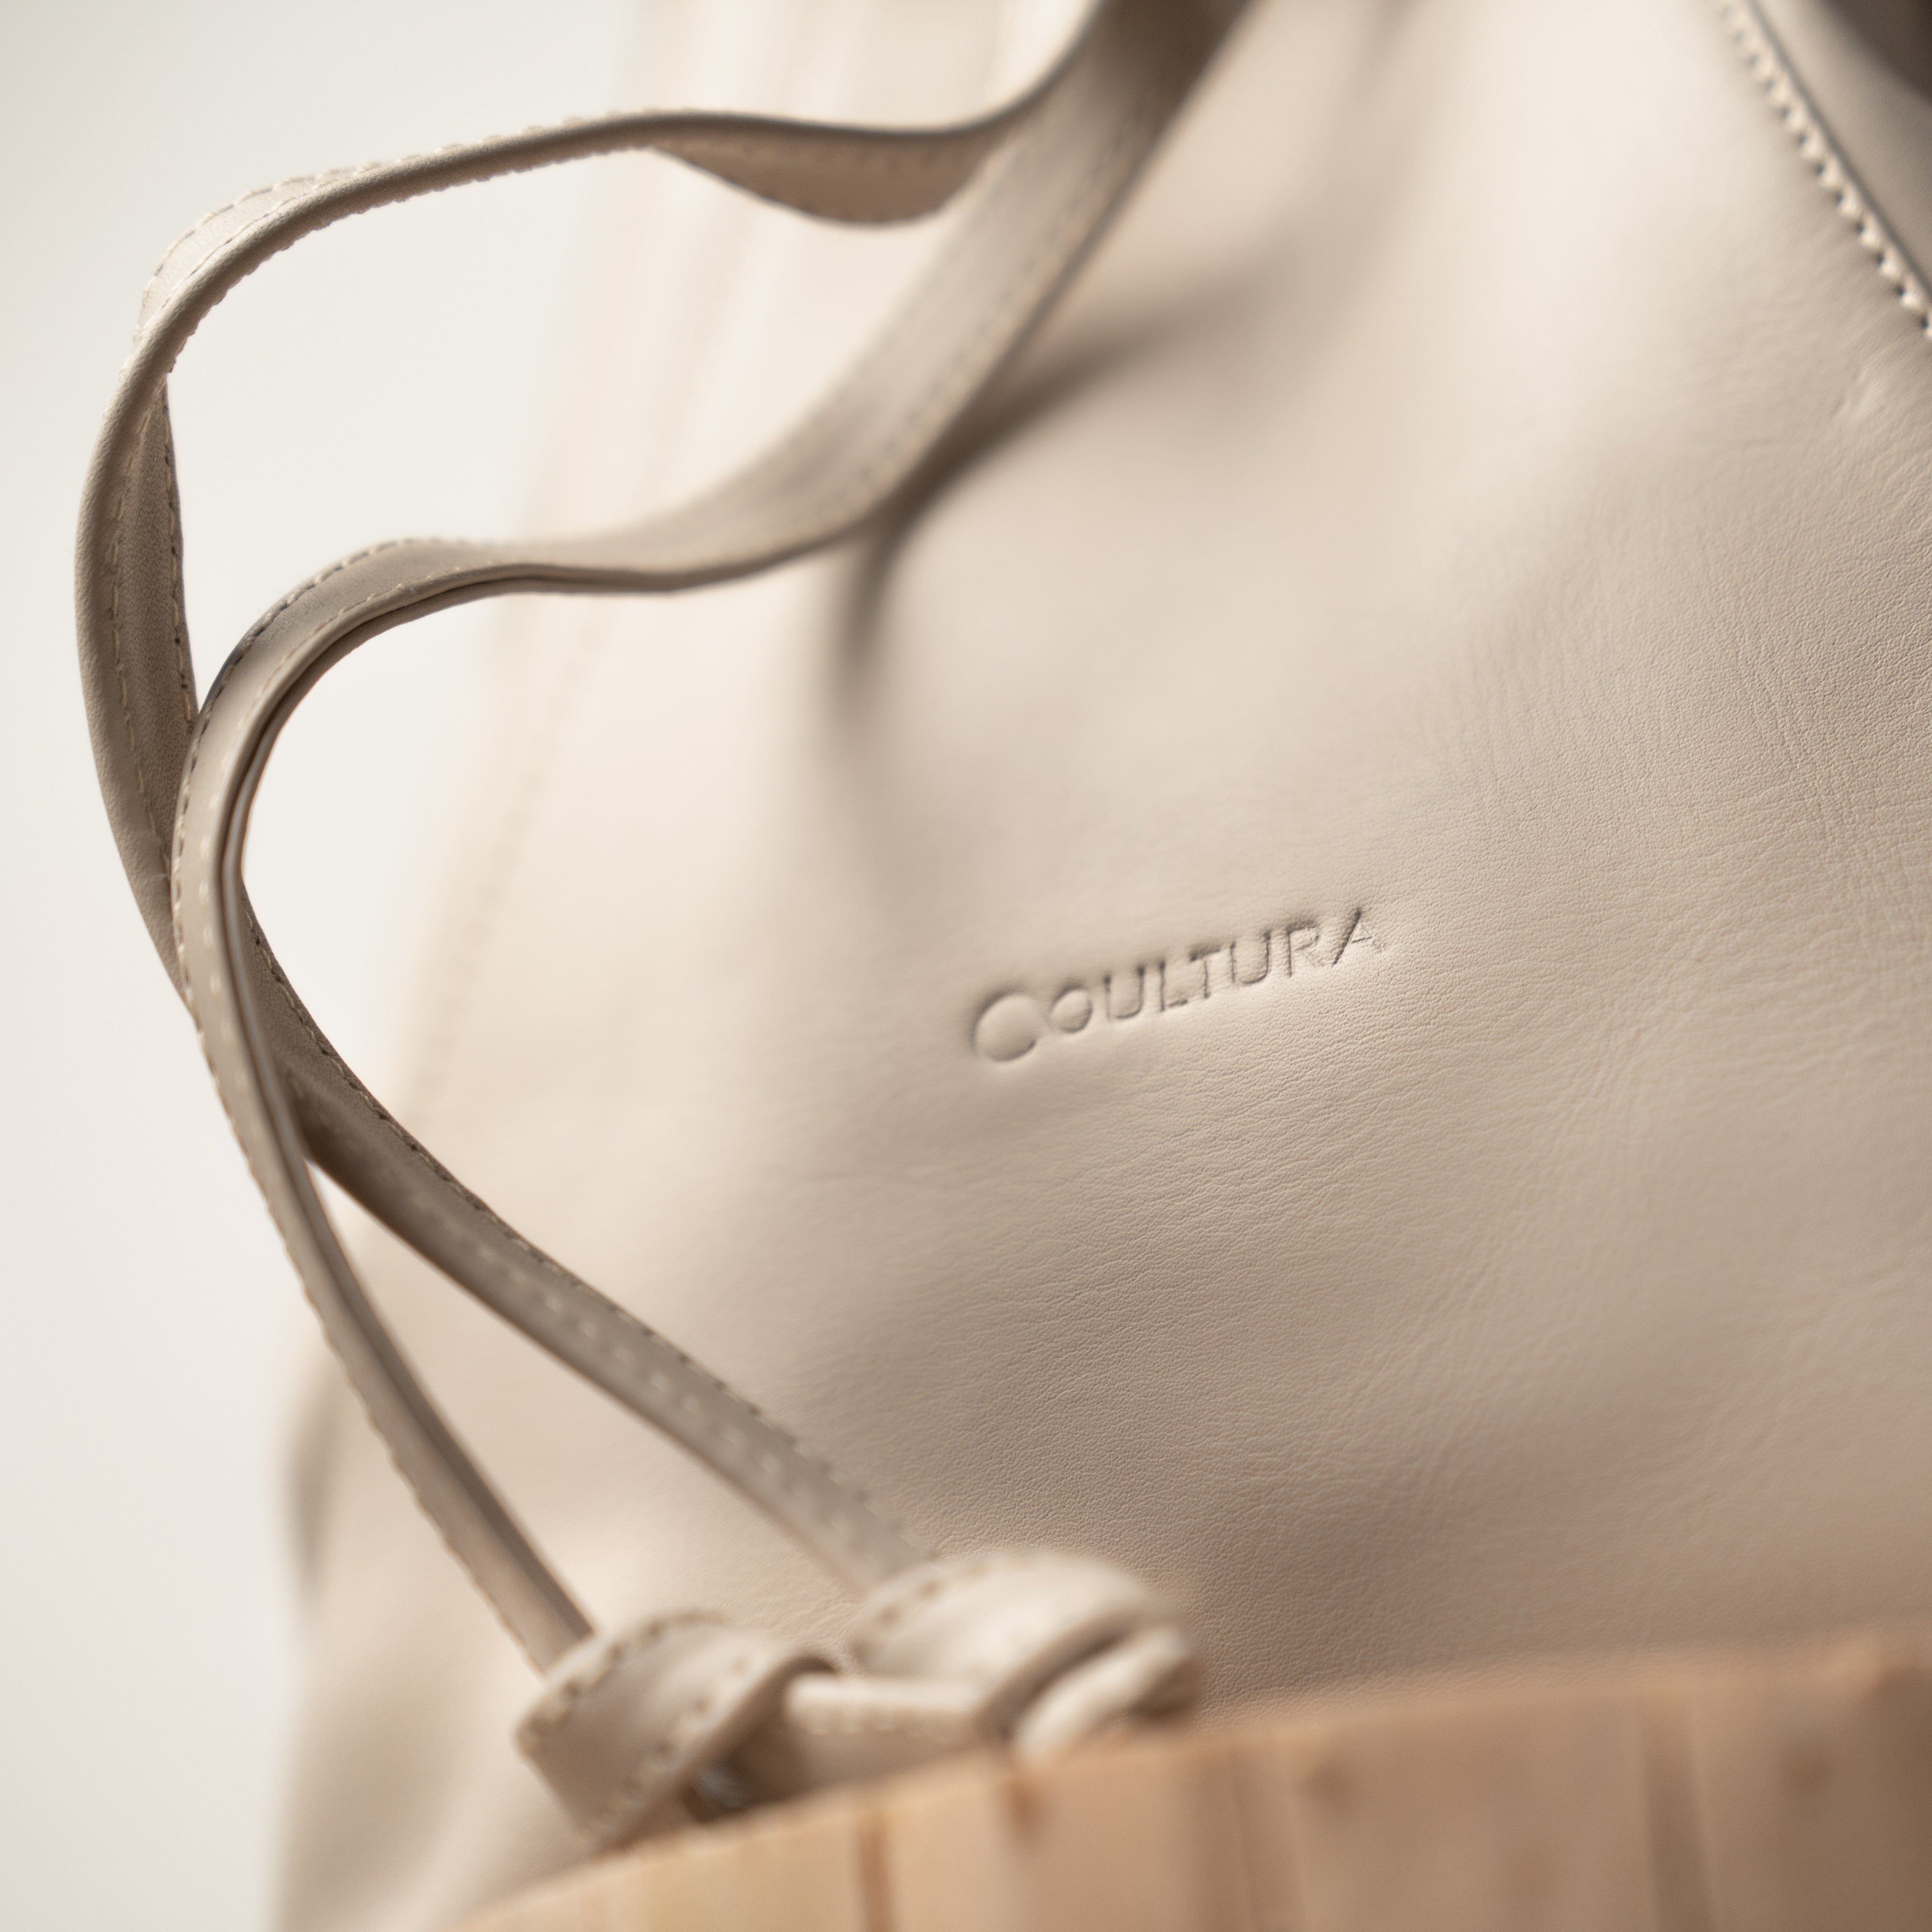 Resa Leather Shoulder Bag - Stone White